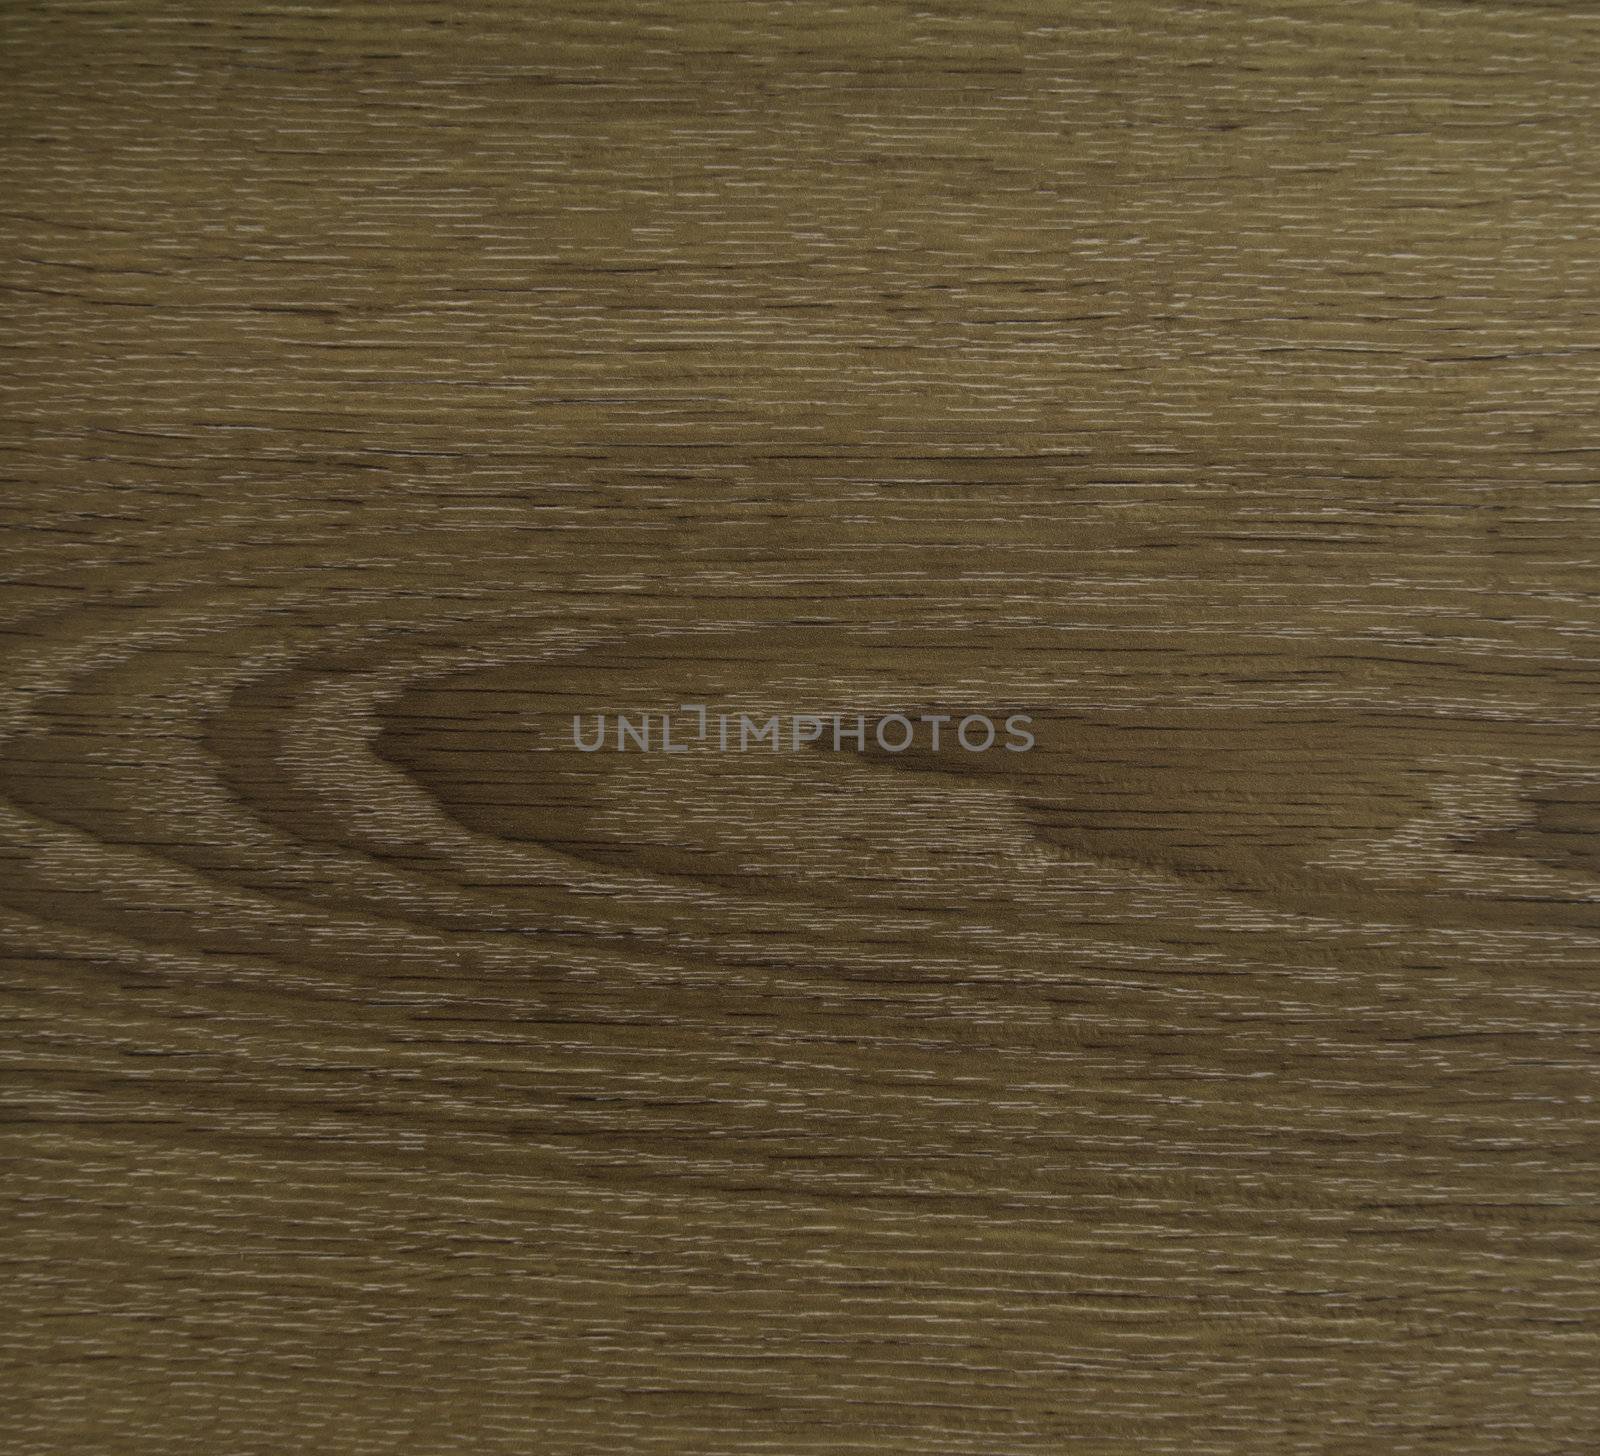 brown wood texture, laminated floor pattern 